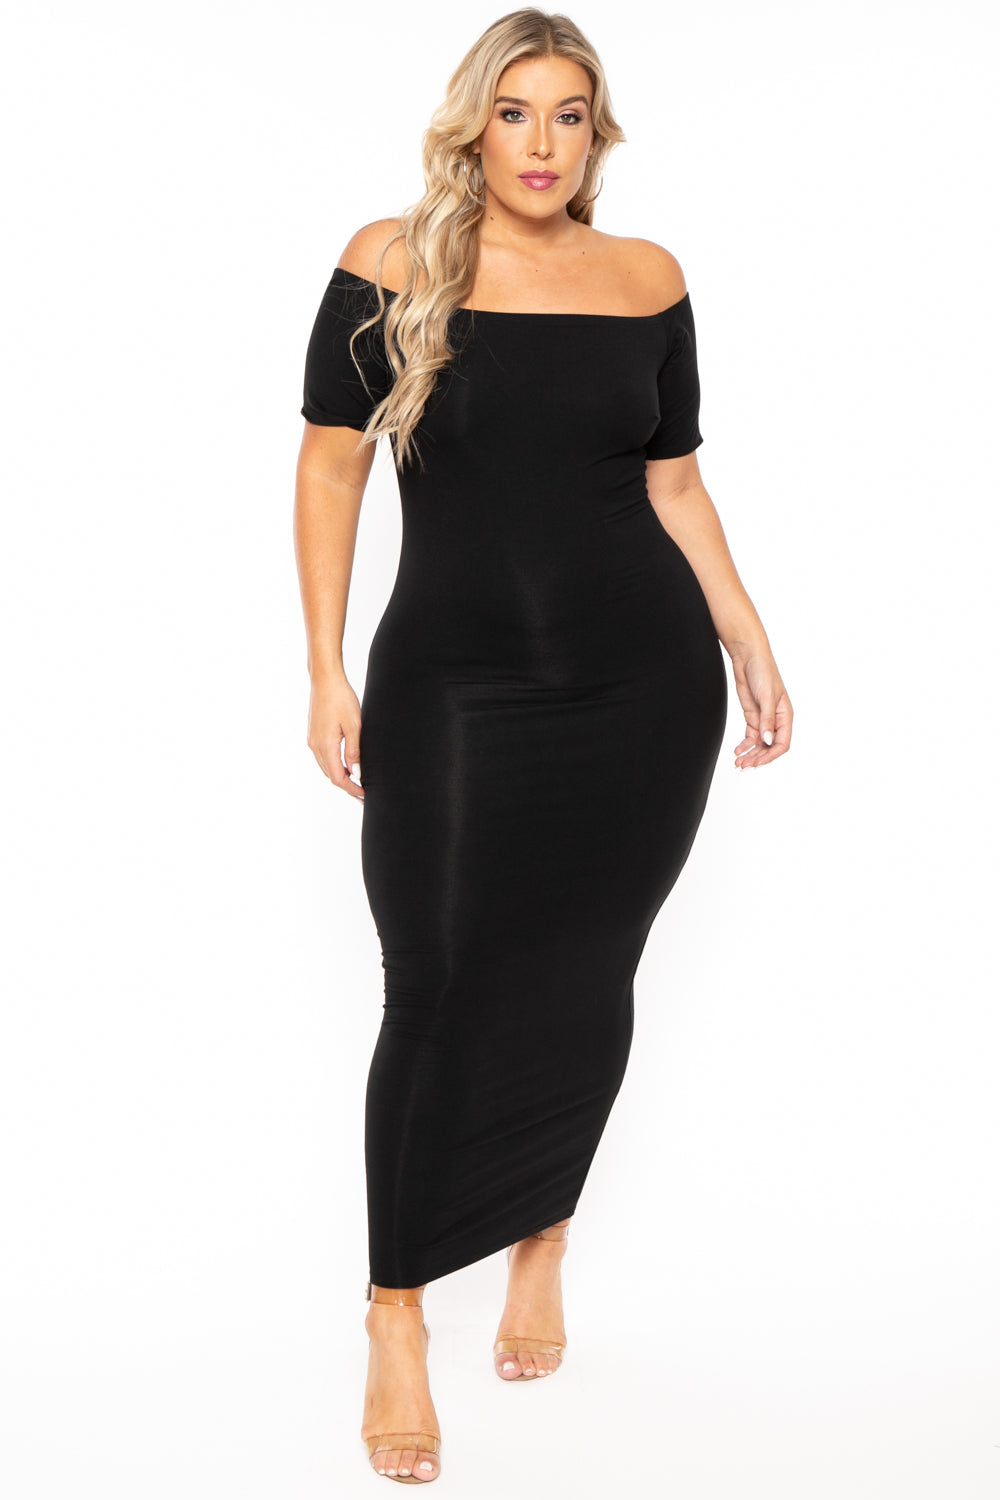 Curvy Sense Dresses 1X / Black Plus Size Off The Shoulder Tube Maxi Dress - Black